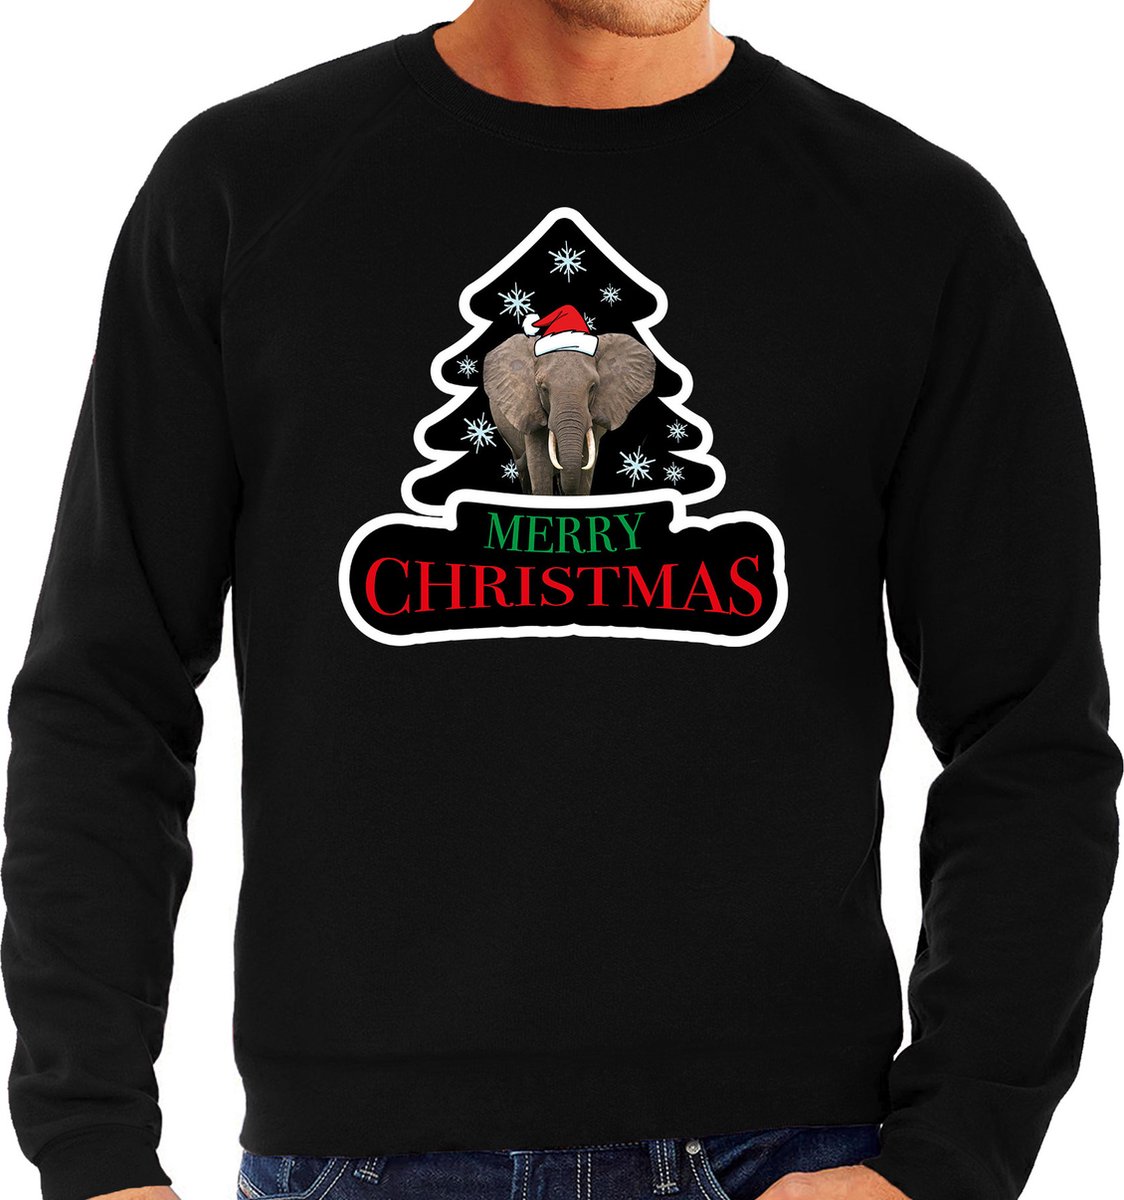 Dieren kersttrui olifant zwart heren - Foute olifanten kerstsweater - Kerst outfit dieren liefhebber M